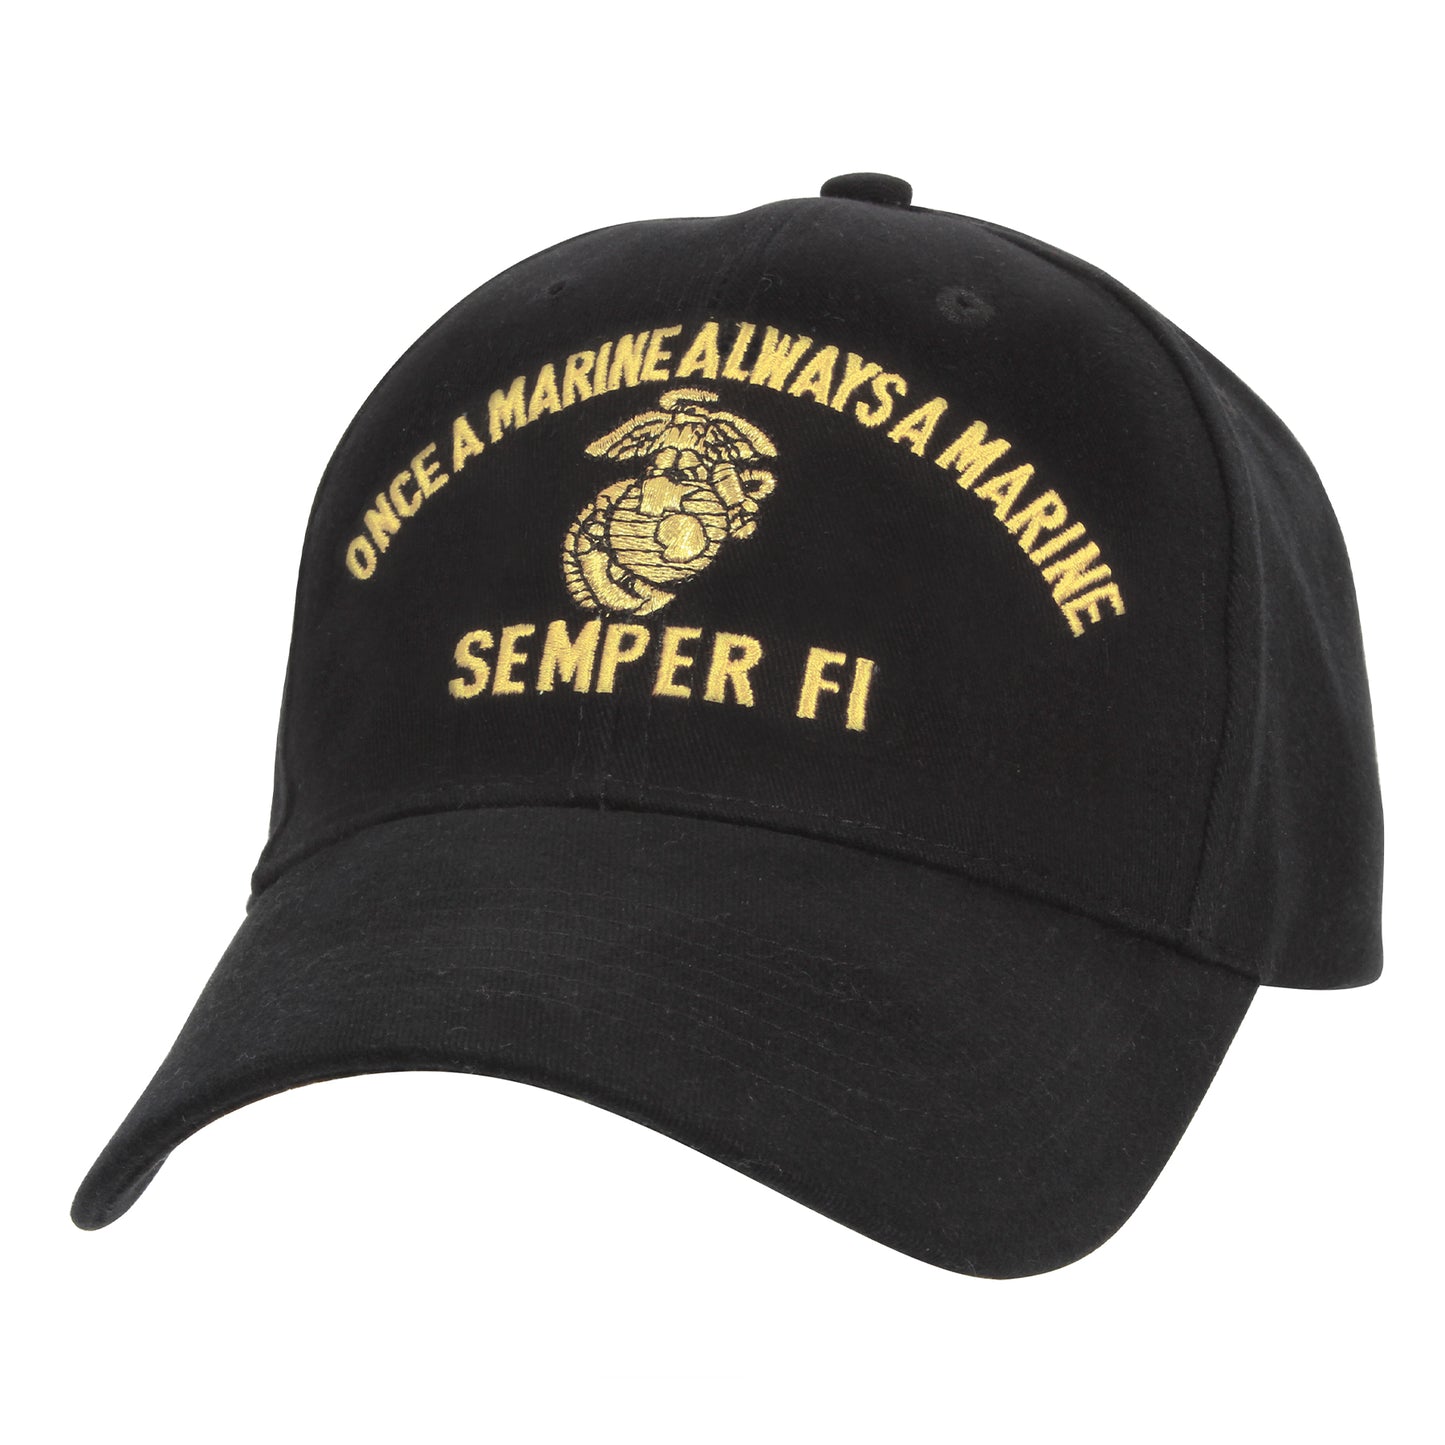 Cap, Once a Marine Always a Marine (Semper Fi)